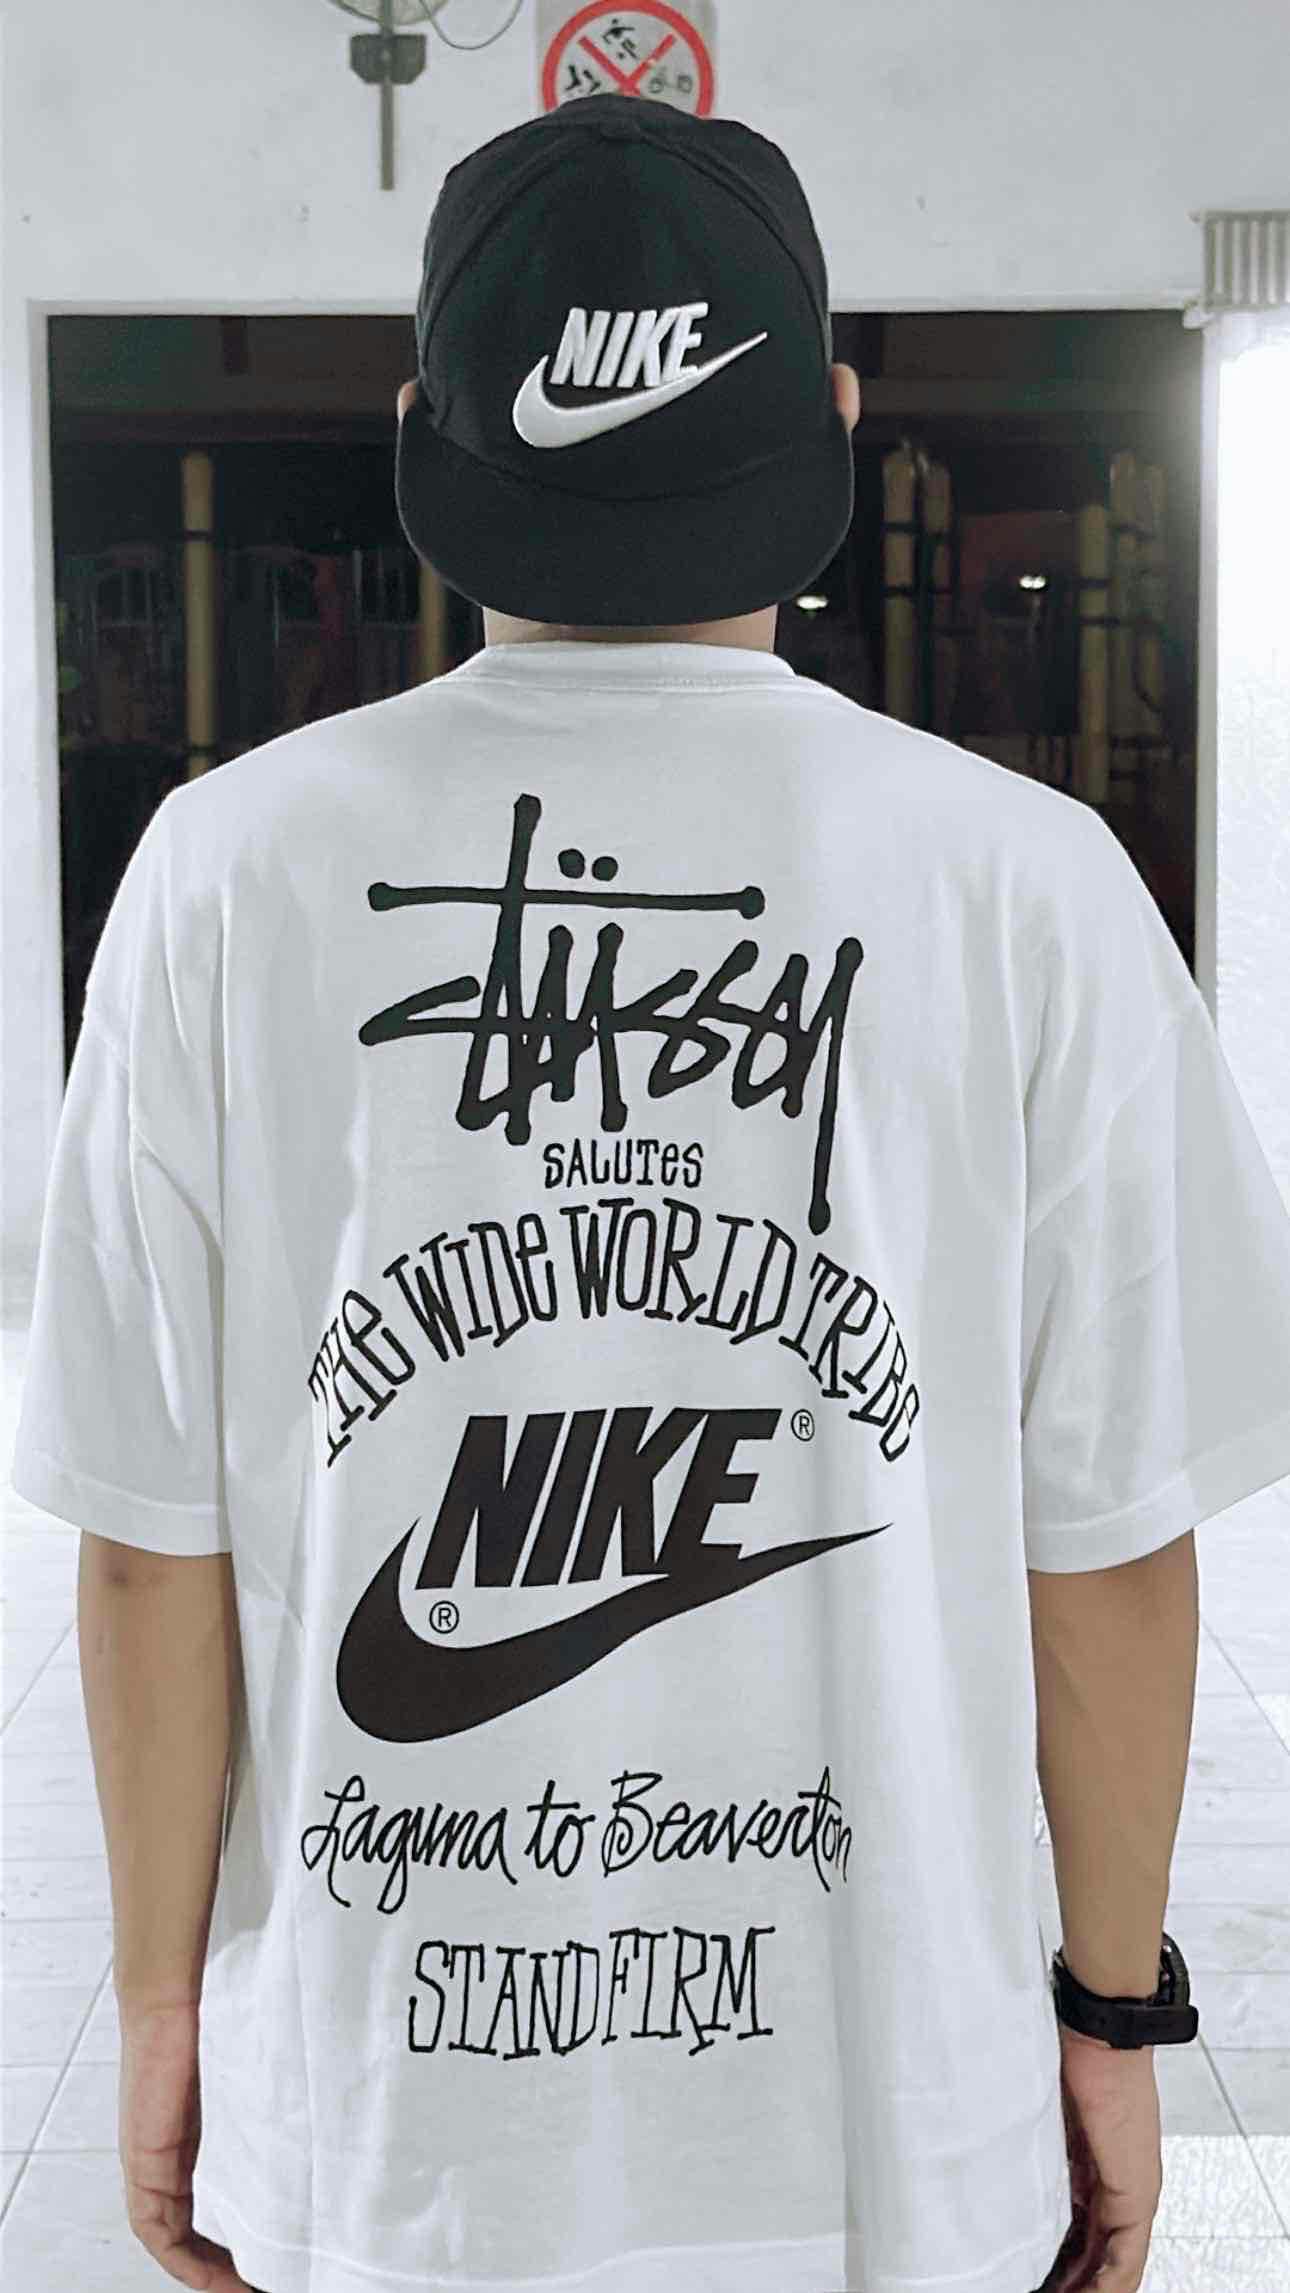 Nike x Stussy Peace, Love, Swoosh T-shirt (Asia Sizing) White